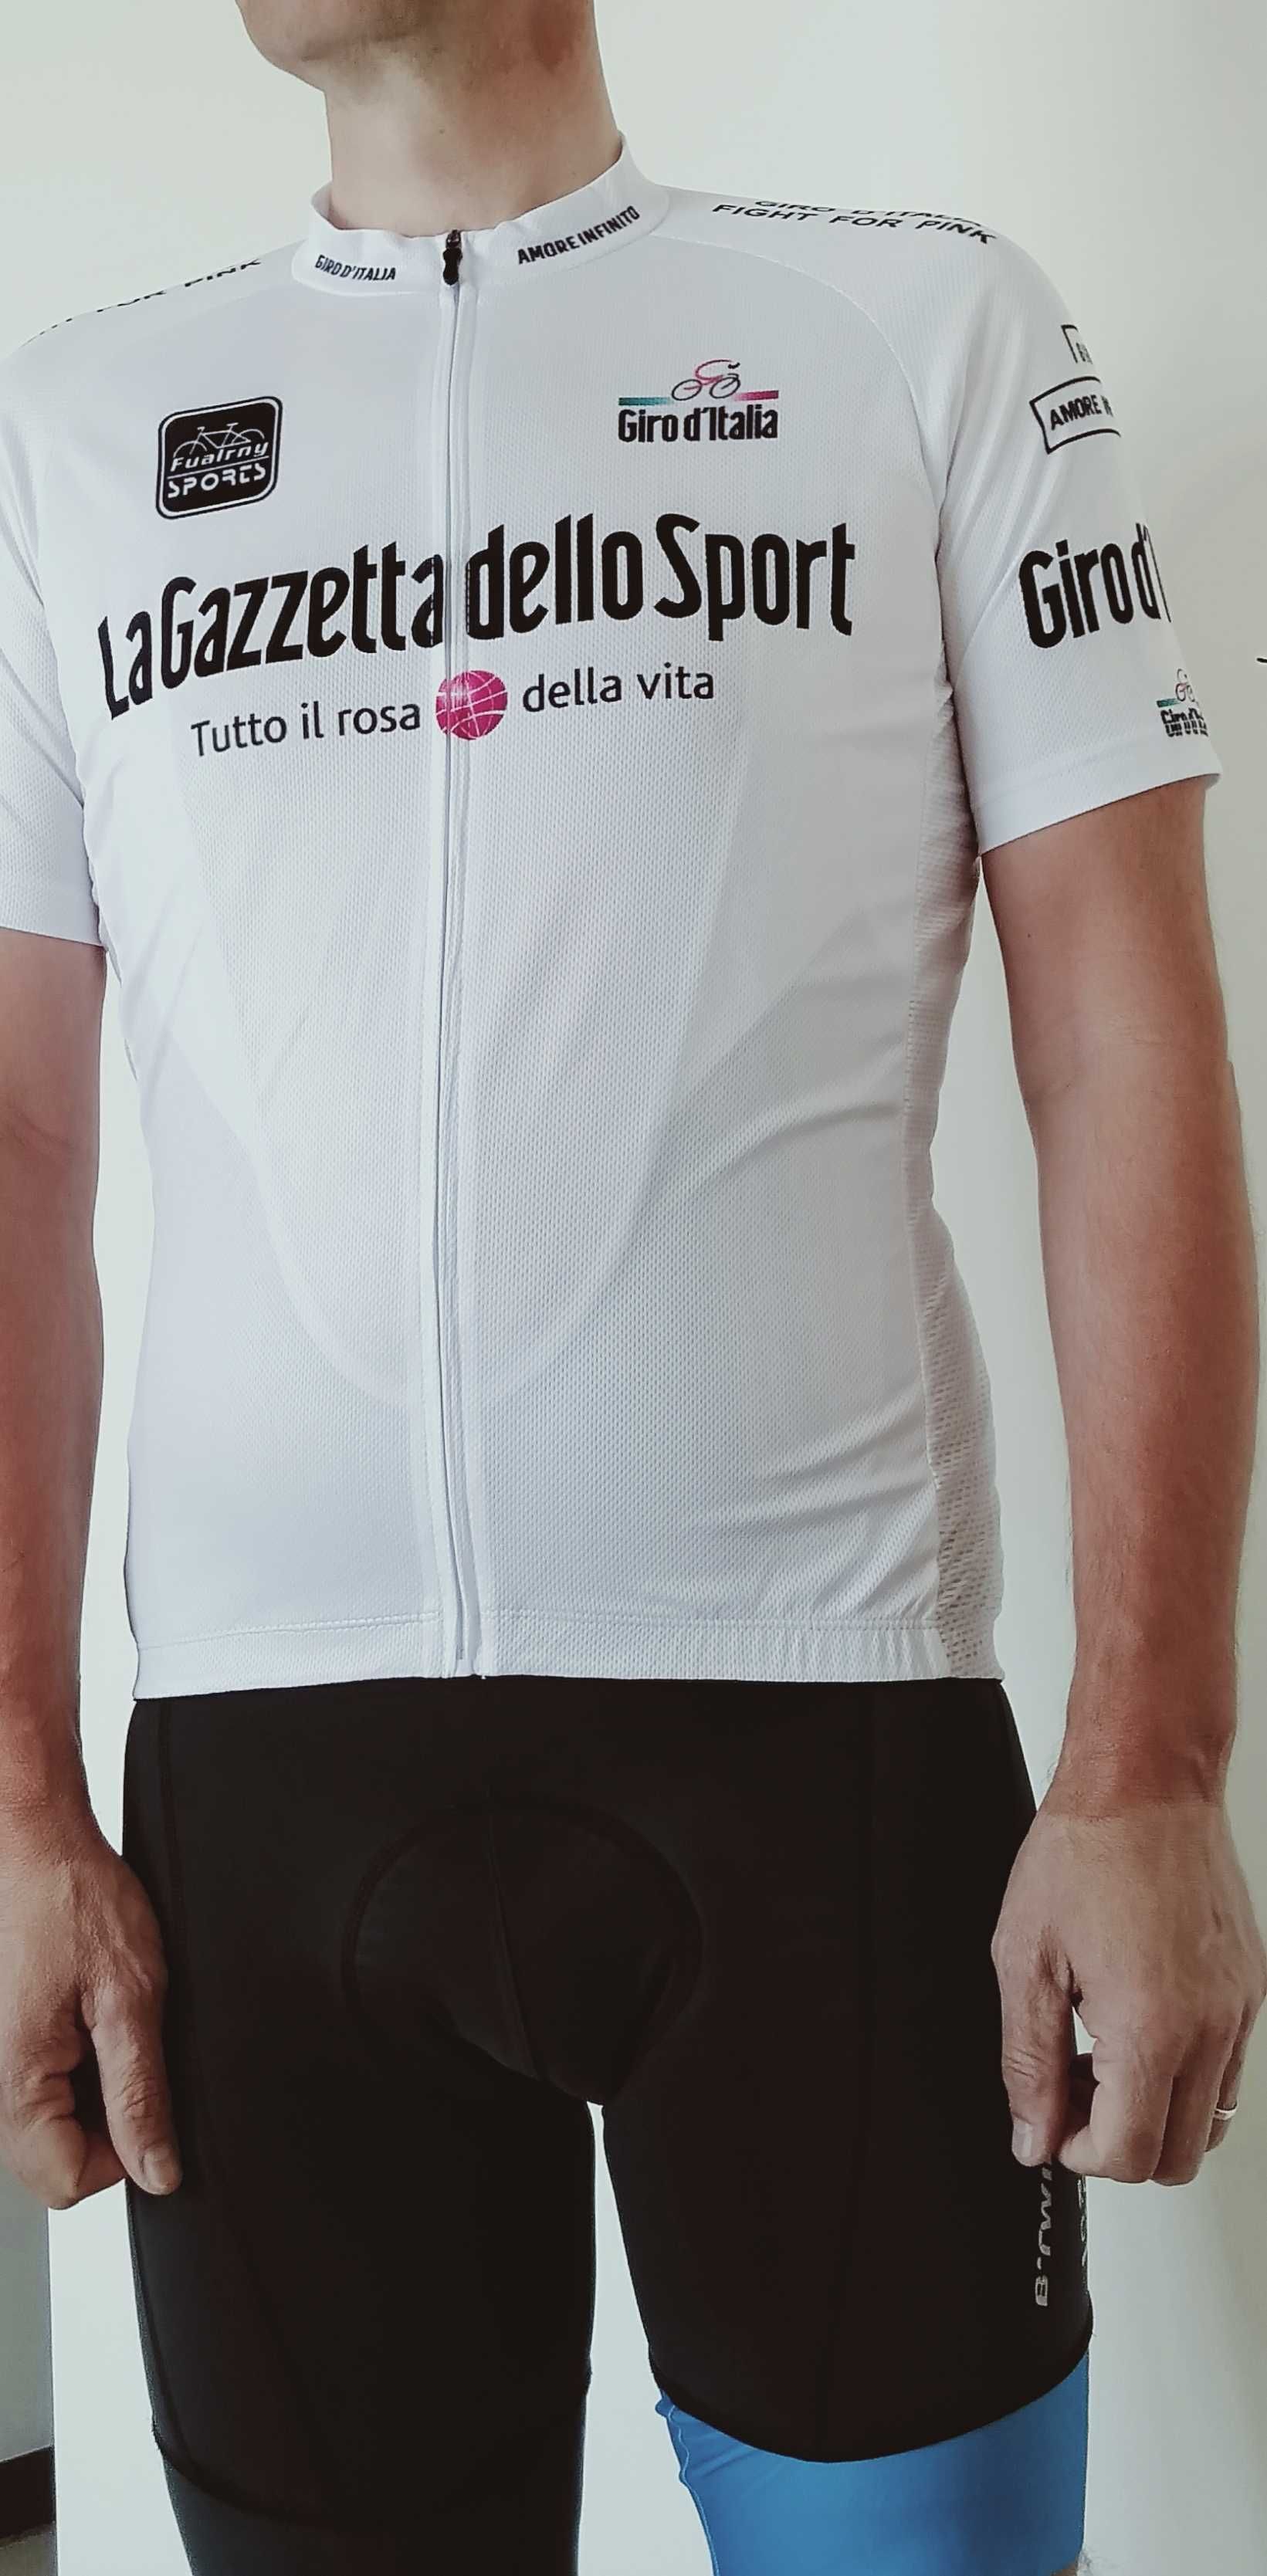 Koszulka rowerowa męska Giro d'Italia r. L